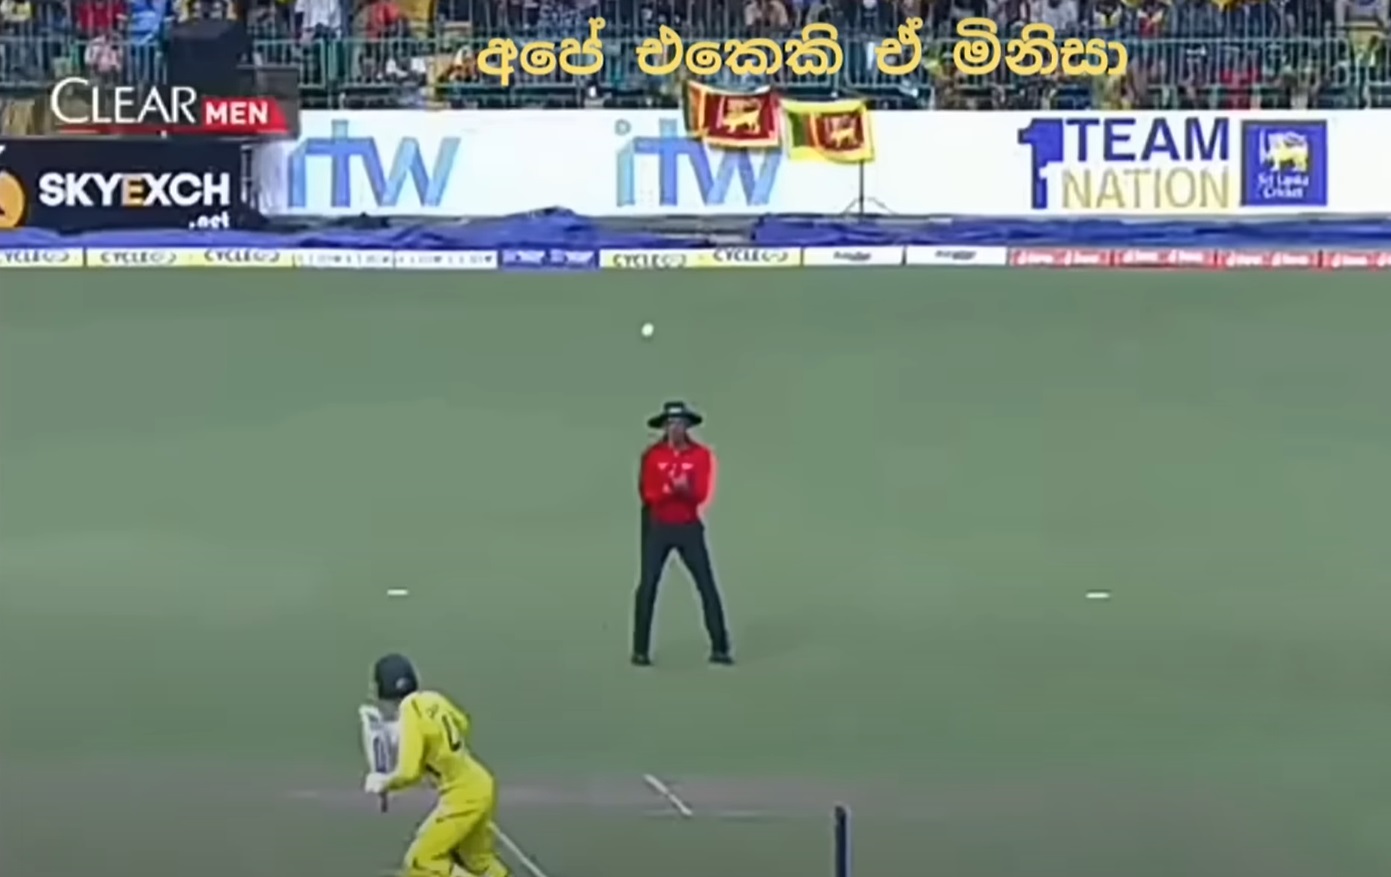 WATCH | Umpire Kumar Dharmasena going to take a catch during Sri Lanka versus Australia